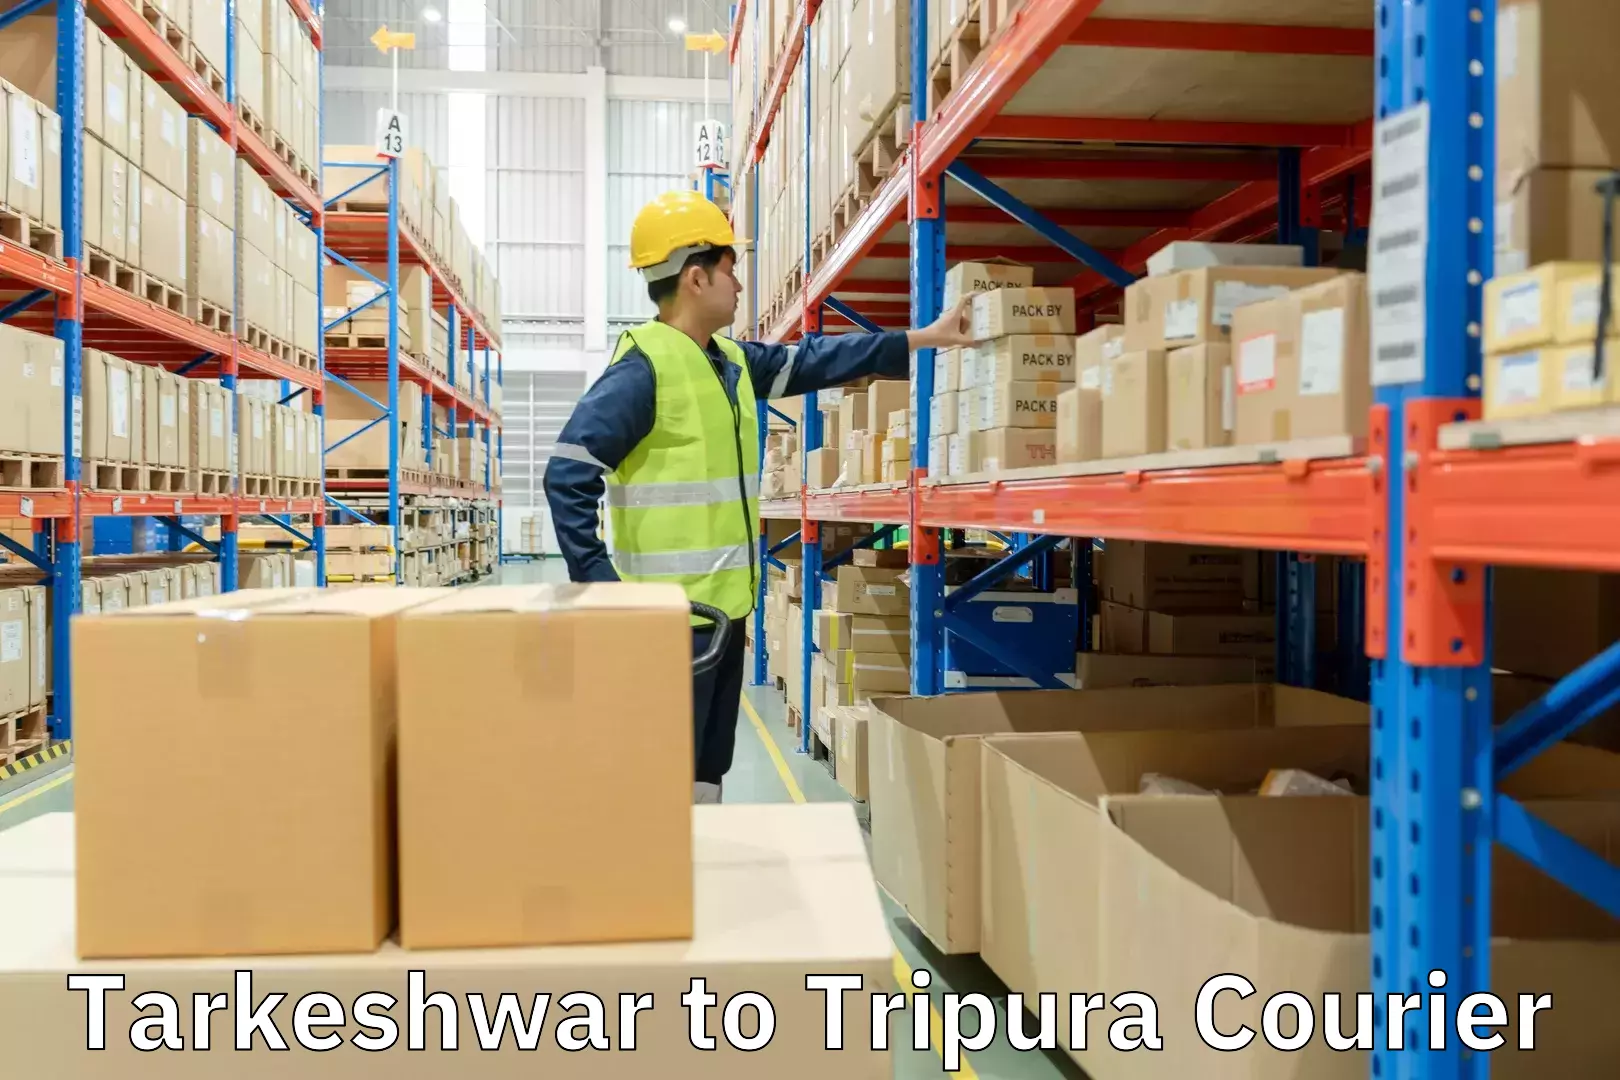 Delivery service partnership Tarkeshwar to Tripura